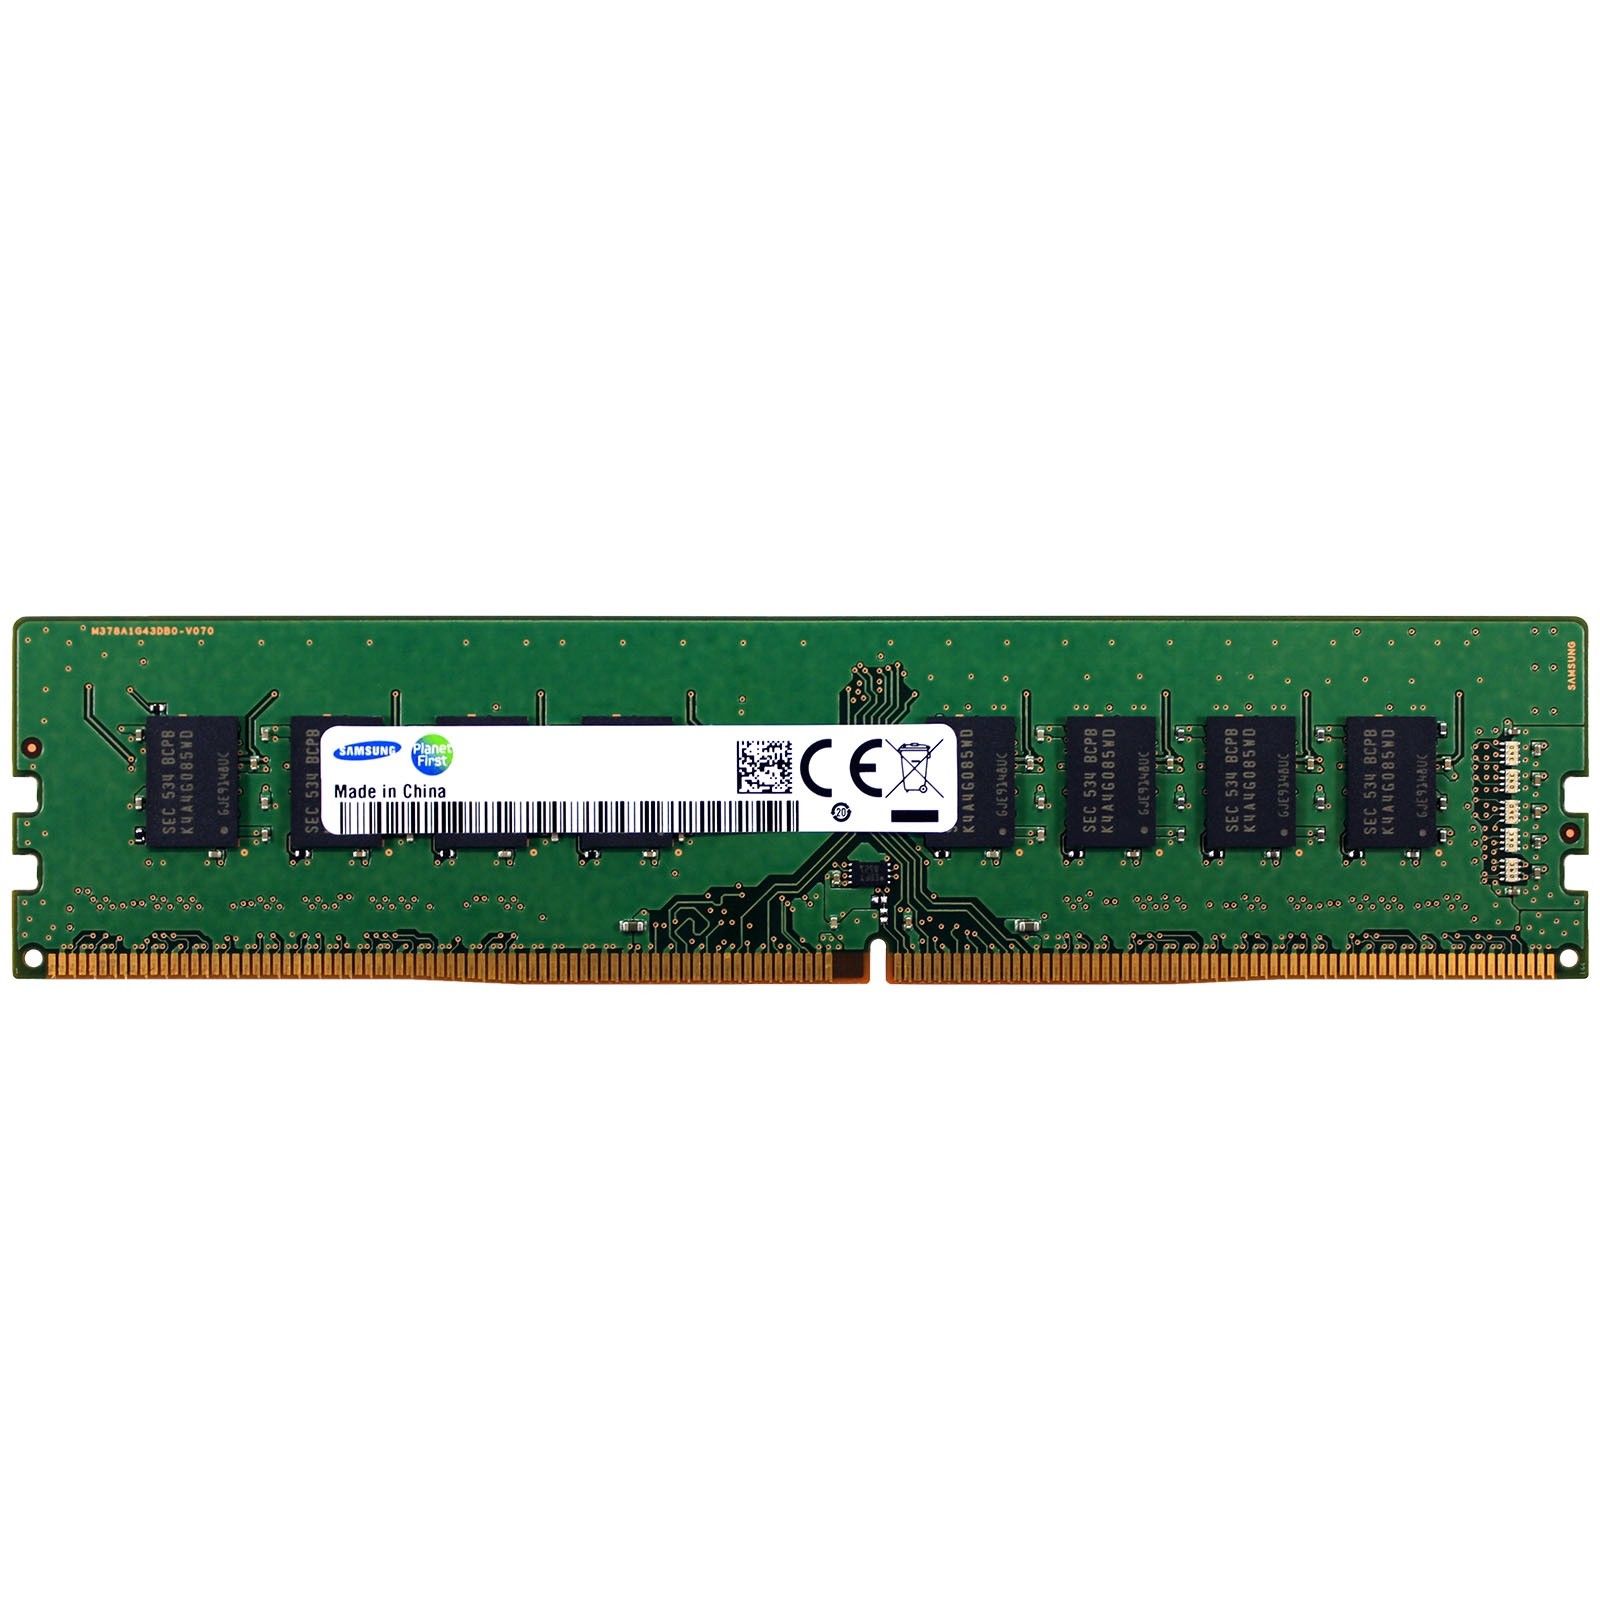 8GB Modules DDR3 1600MHz Samsung M378B1G73EB0-CK0 12800 NON-ECC RAM